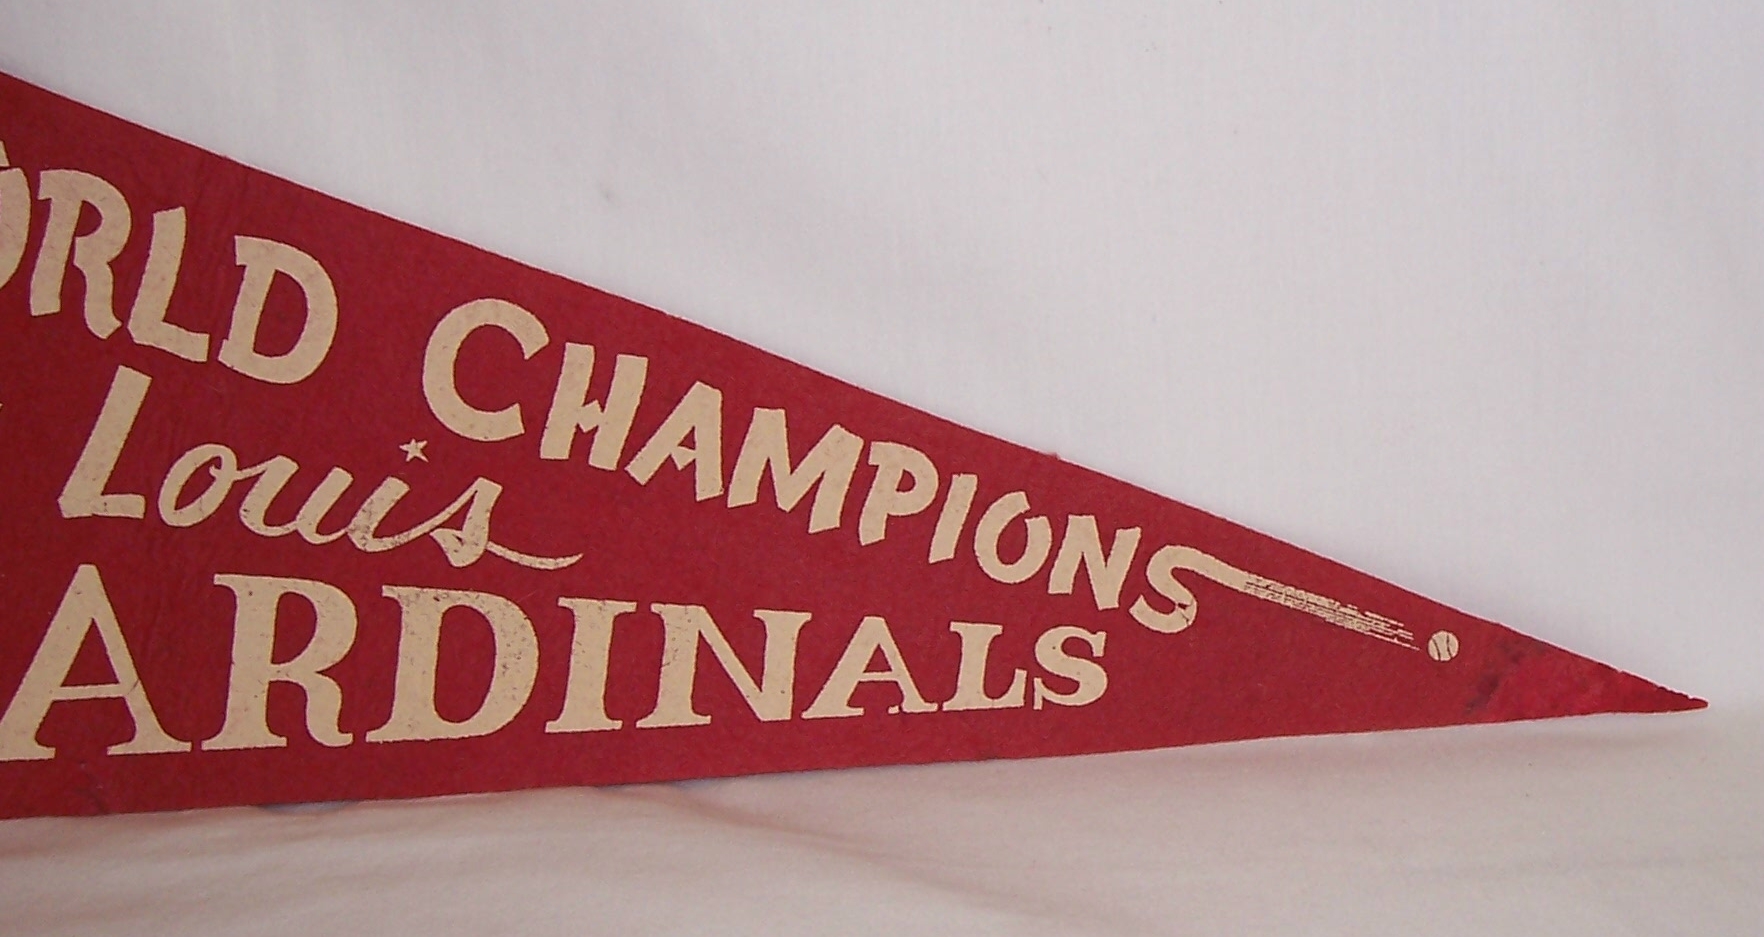 St. Louis Cardinals - 1982 World Series Champions - St Louis Cardinals -  Pin